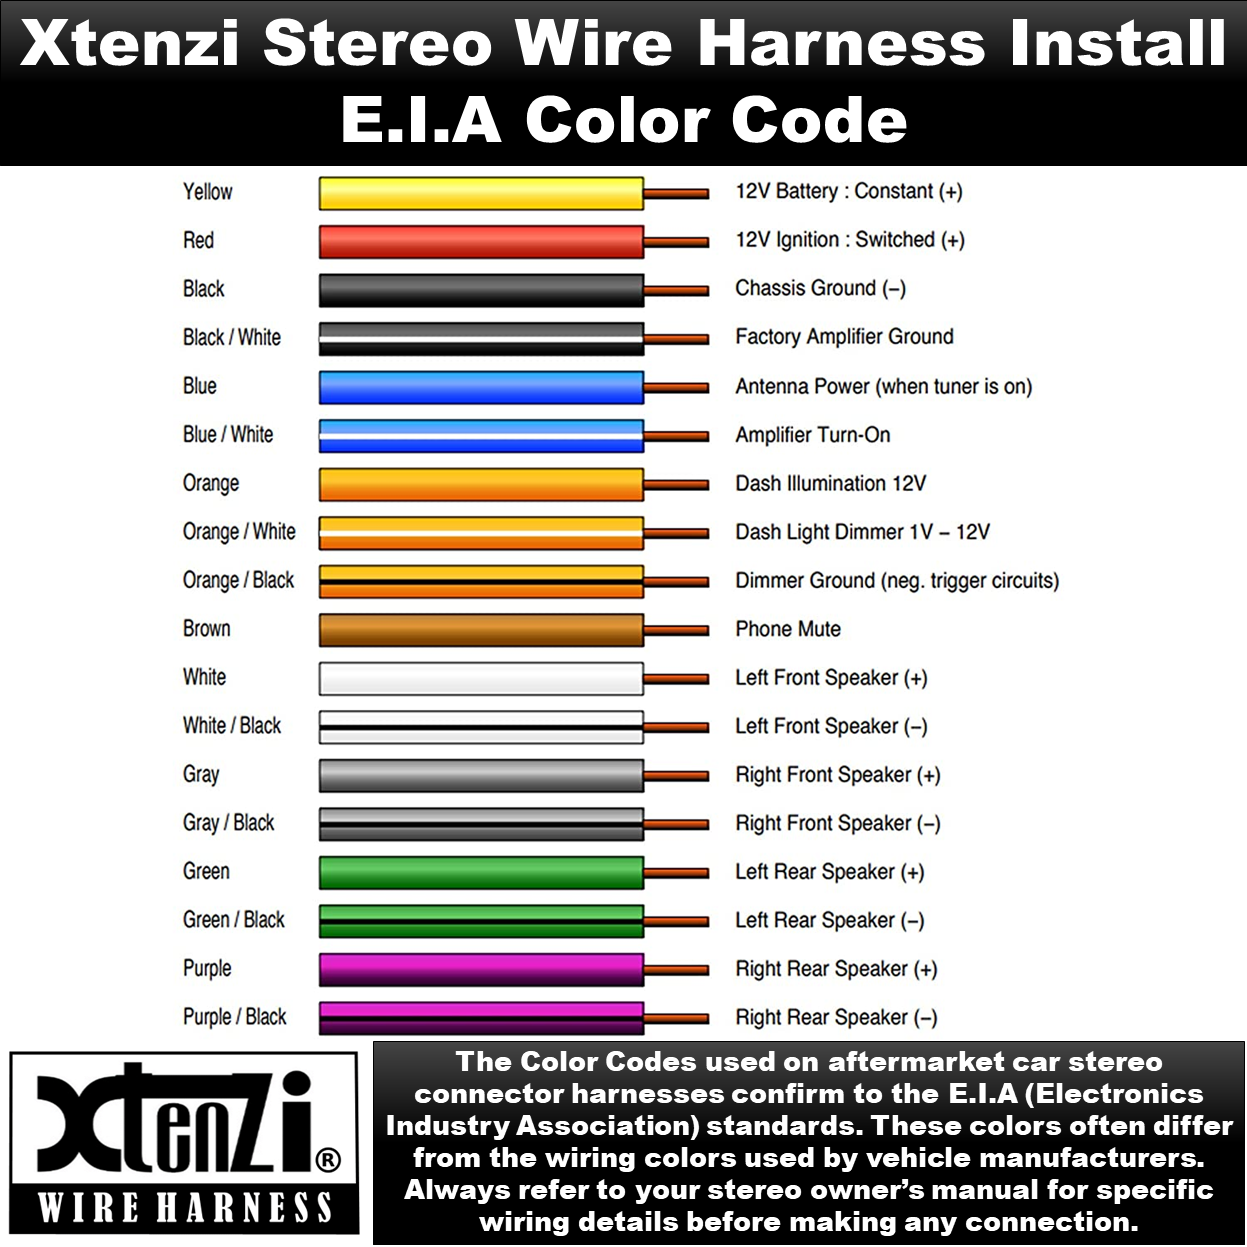 Xtenzi 16Pin Car Radio Power Wire Harness Connector for Pioneer AVH200BT AVH100DVD AVHP4300DVD AVHP4200DVD - XT91006